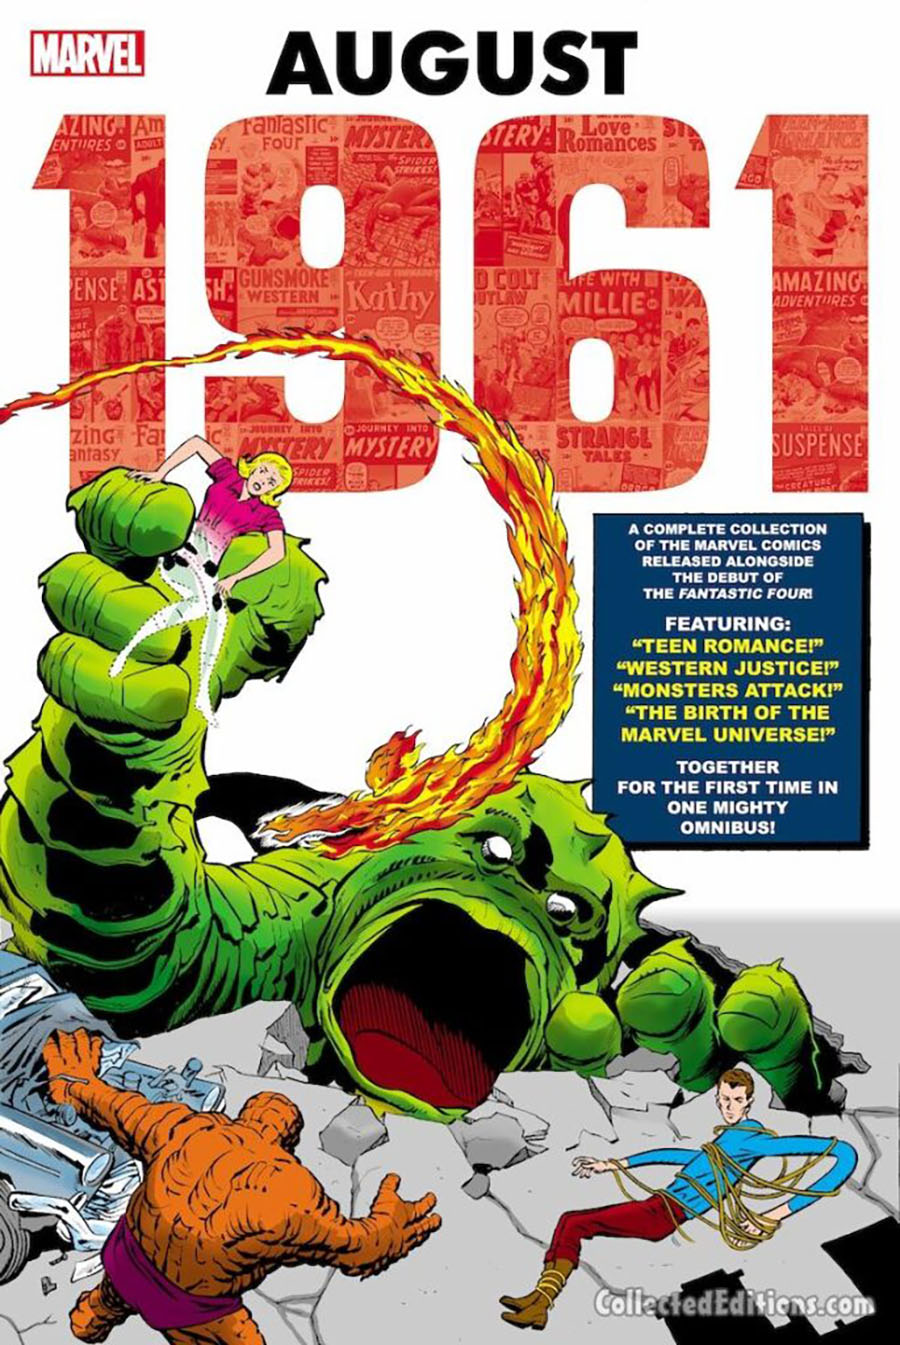 Marvel August 1961 Omnibus HC Direct Market Jack Kirby Variant Cover